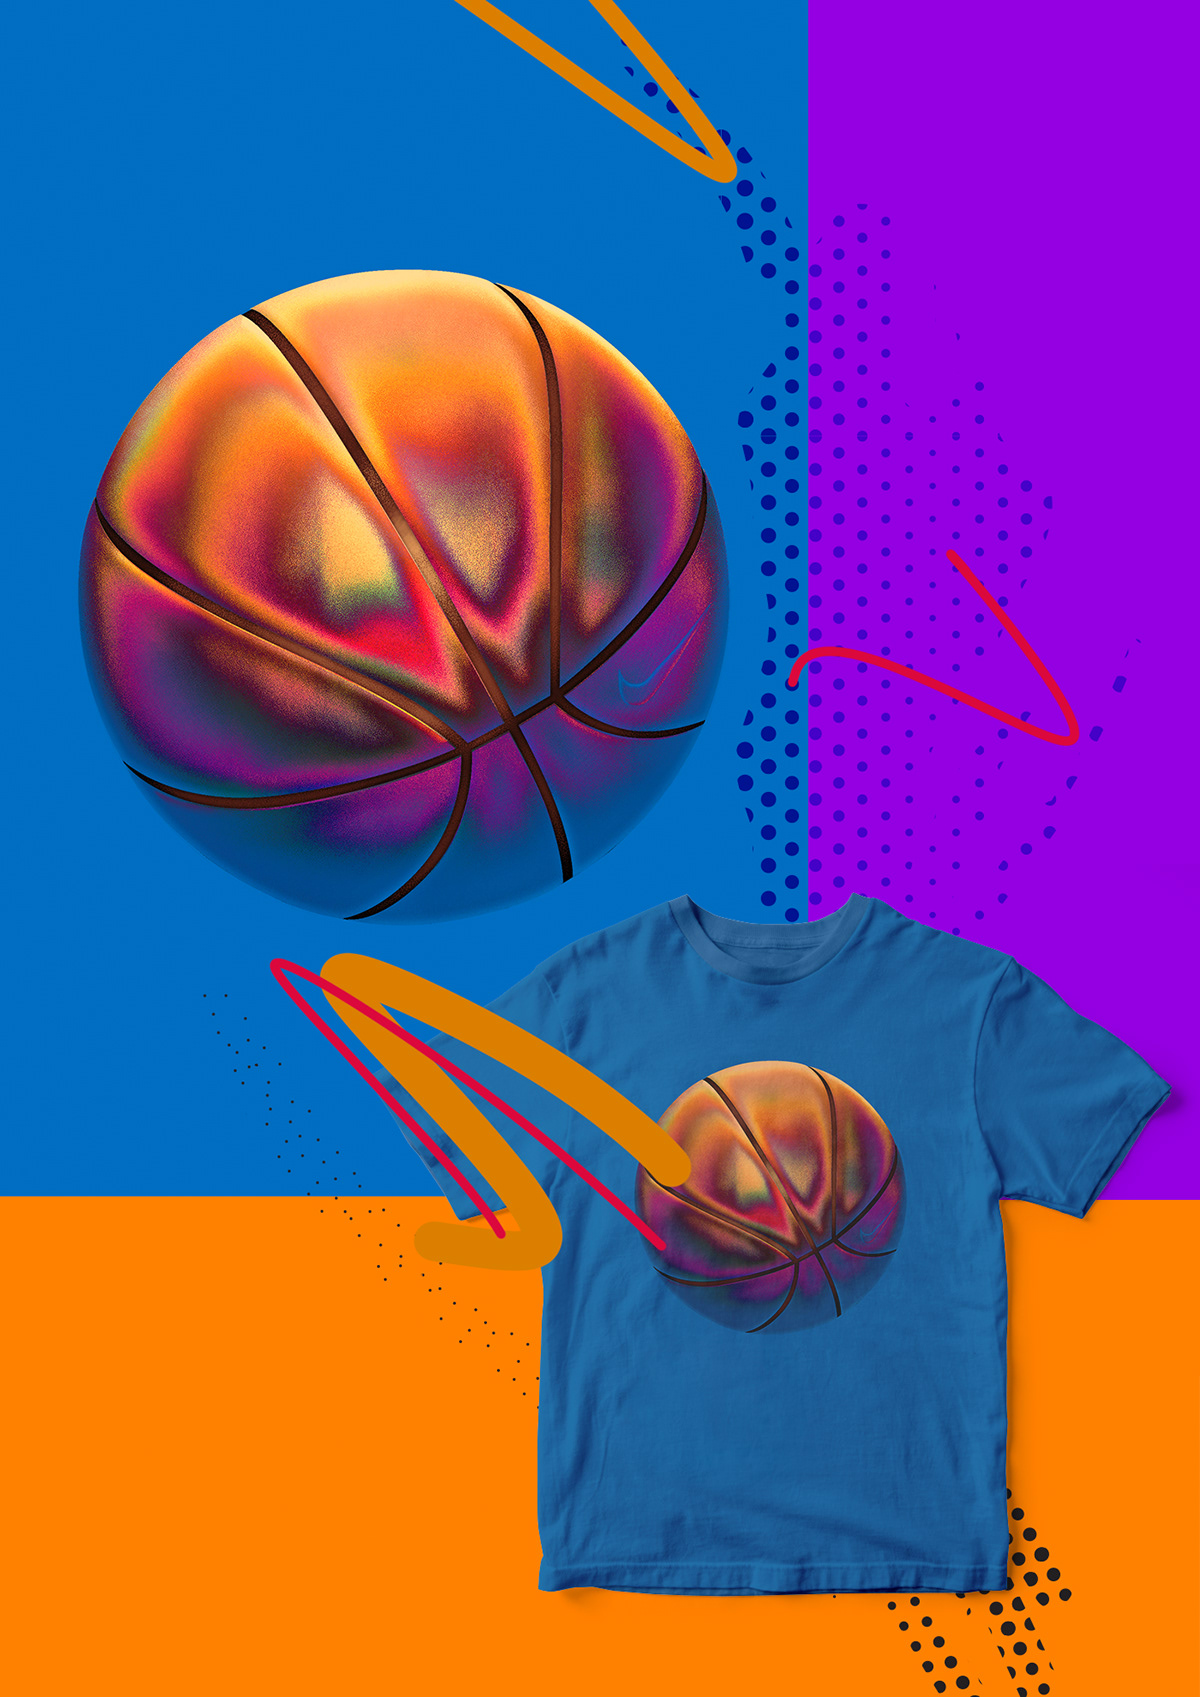 3D basketball iridescent metal Nike poster sport tshirt